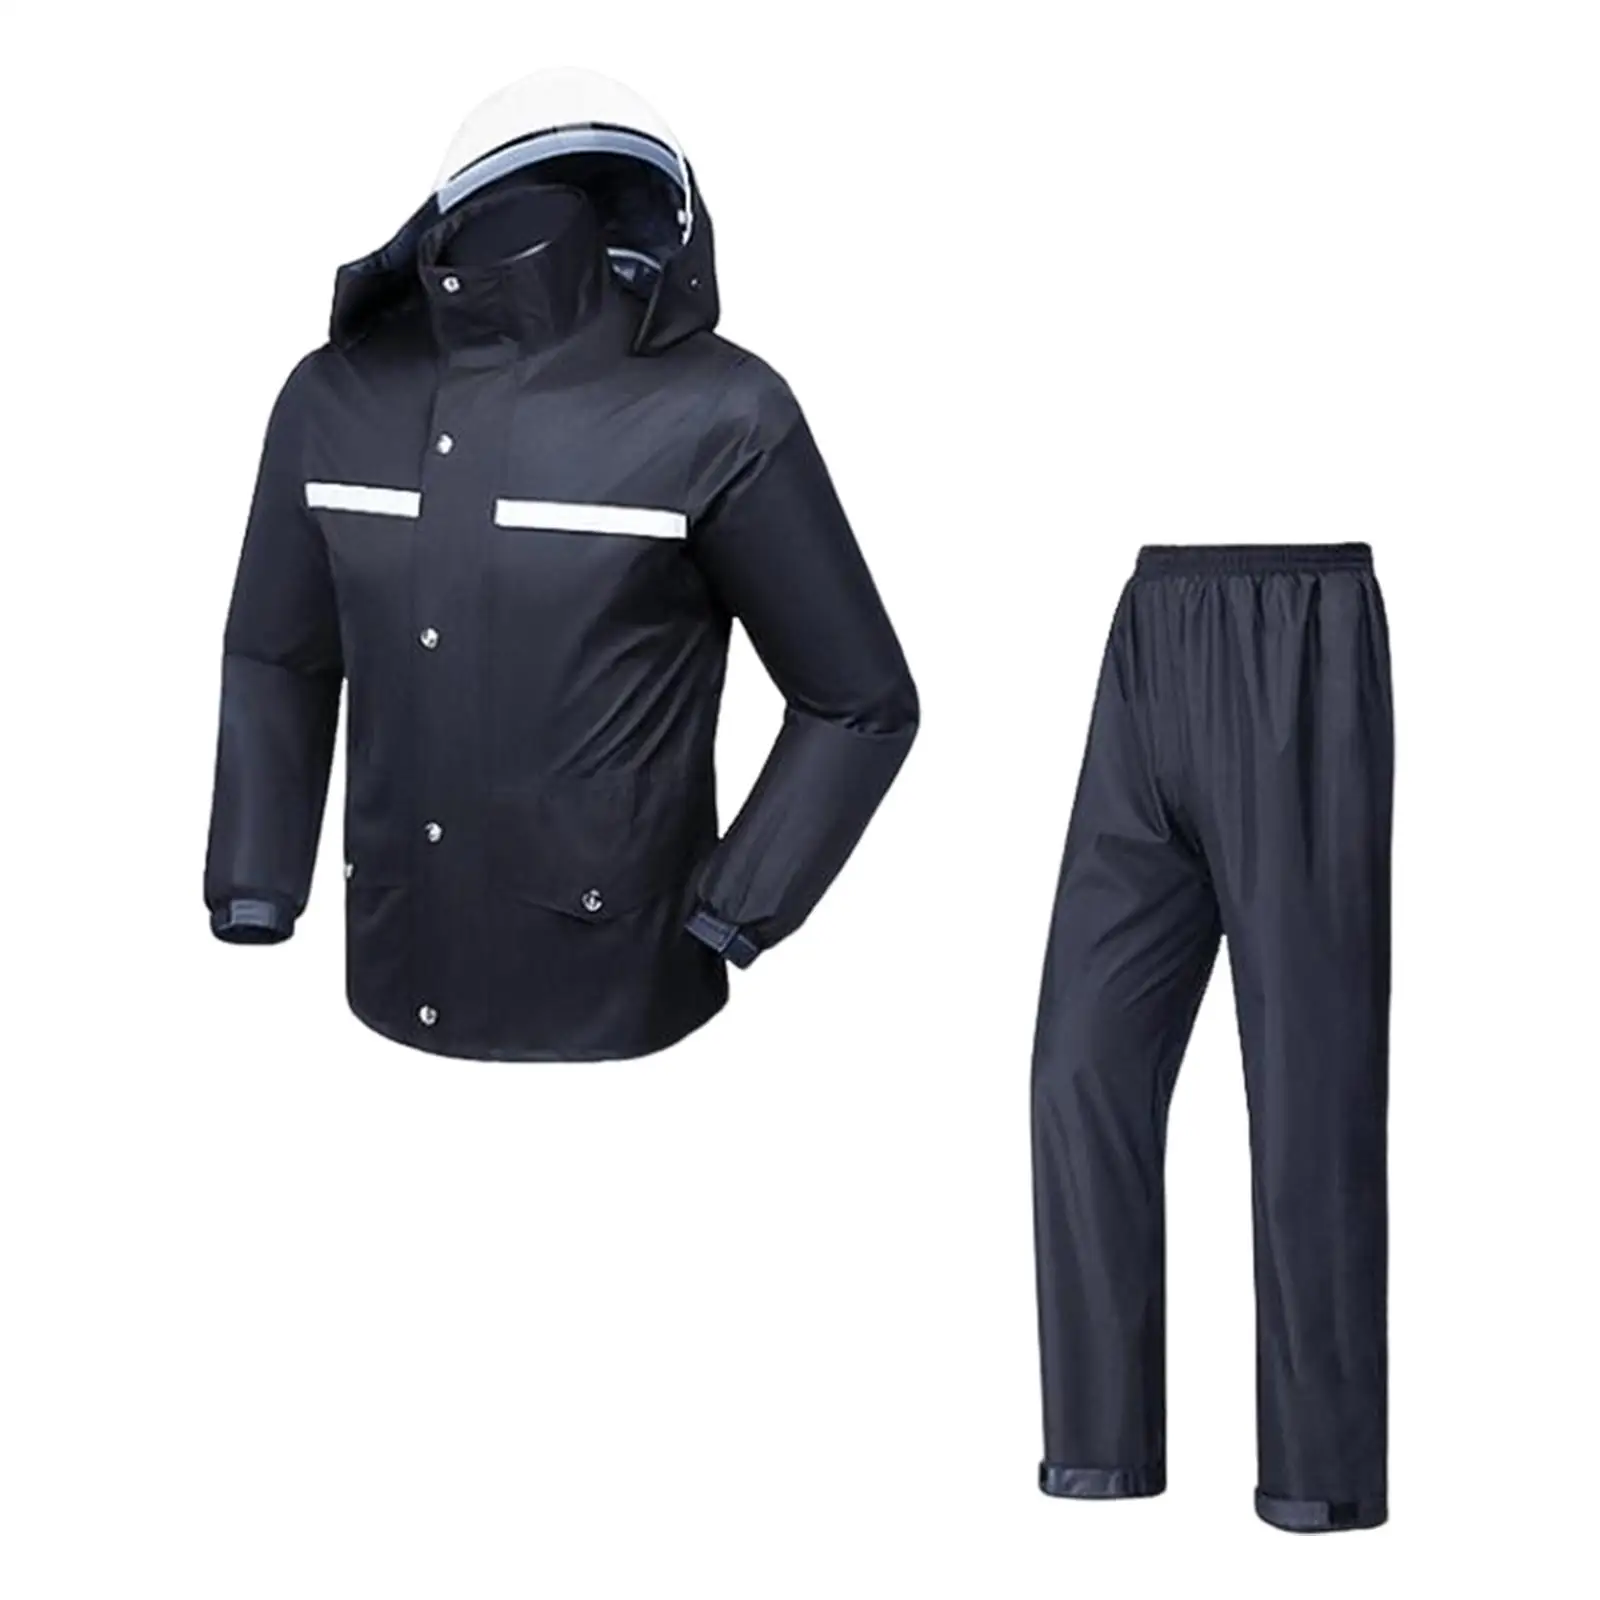 Rain Suit Jacket and Trouser Suit Hooded Breathable Fabric Durable Double Front Pockets Detachable Brim for Heavy Duty Rain